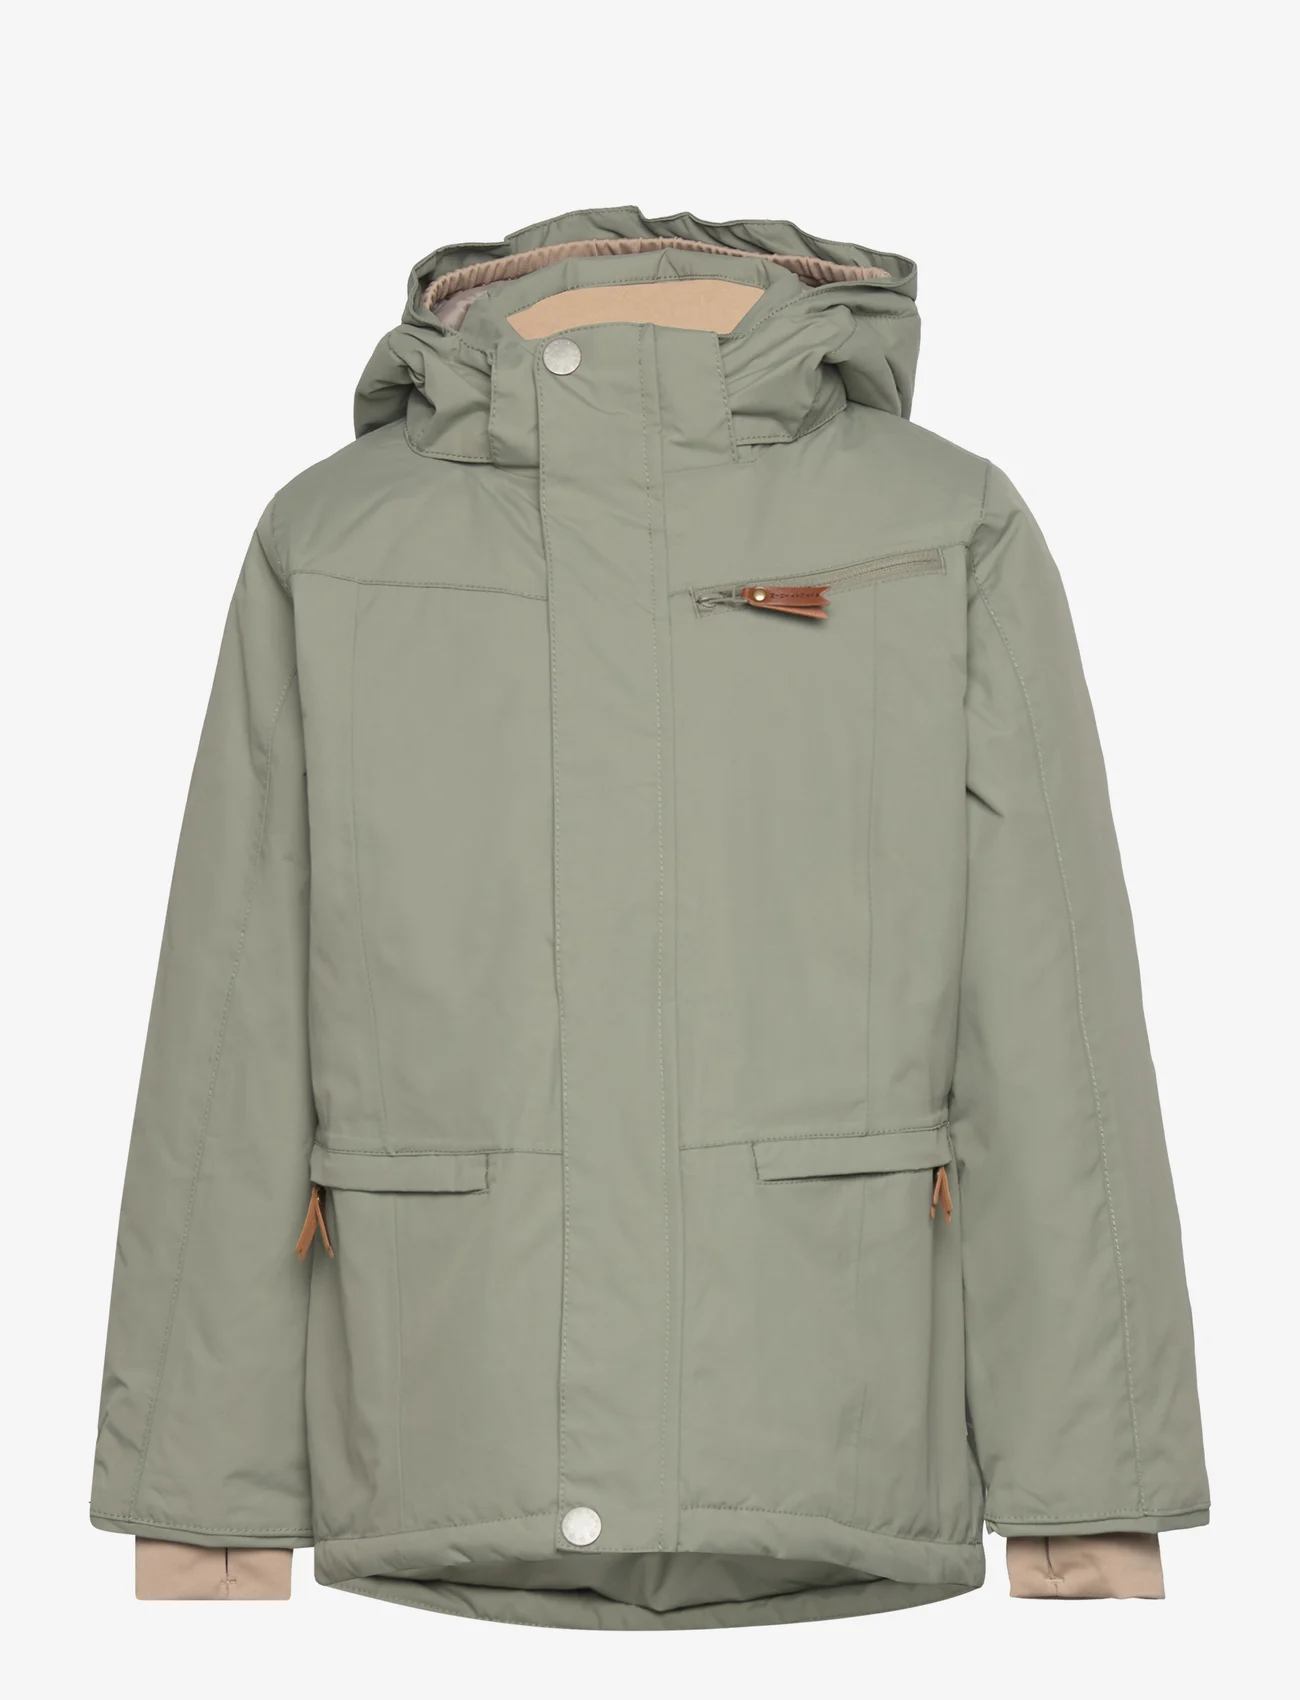 Mini A Ture - Vestyn winter jacket. GRS - puffer & padded - vert - 1